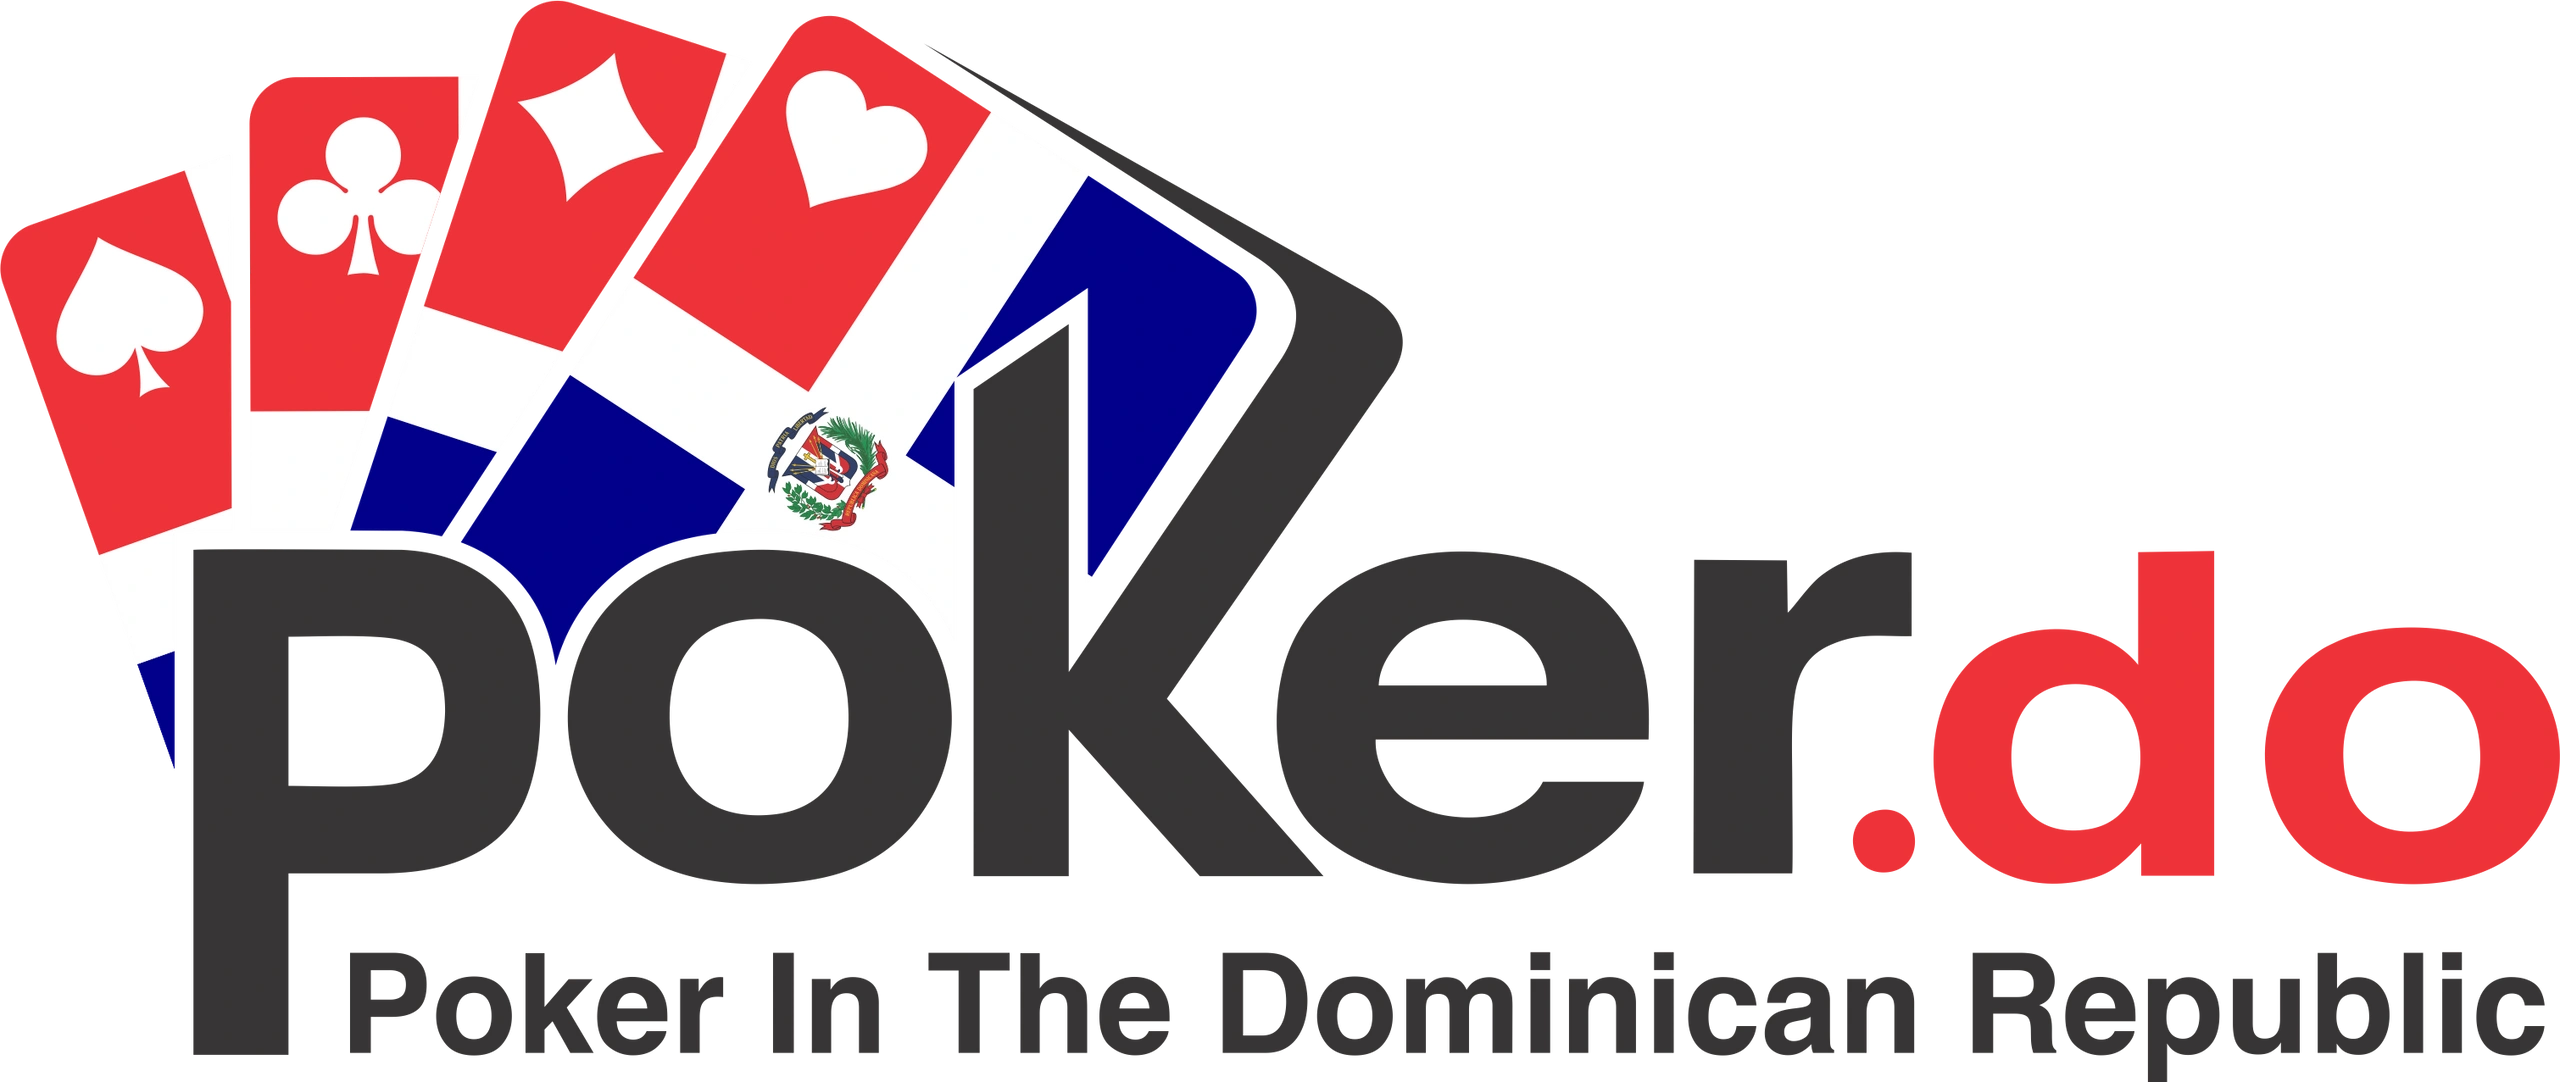 Poker.do - Poker Dominican Republic, No Limit Texas Hold'em